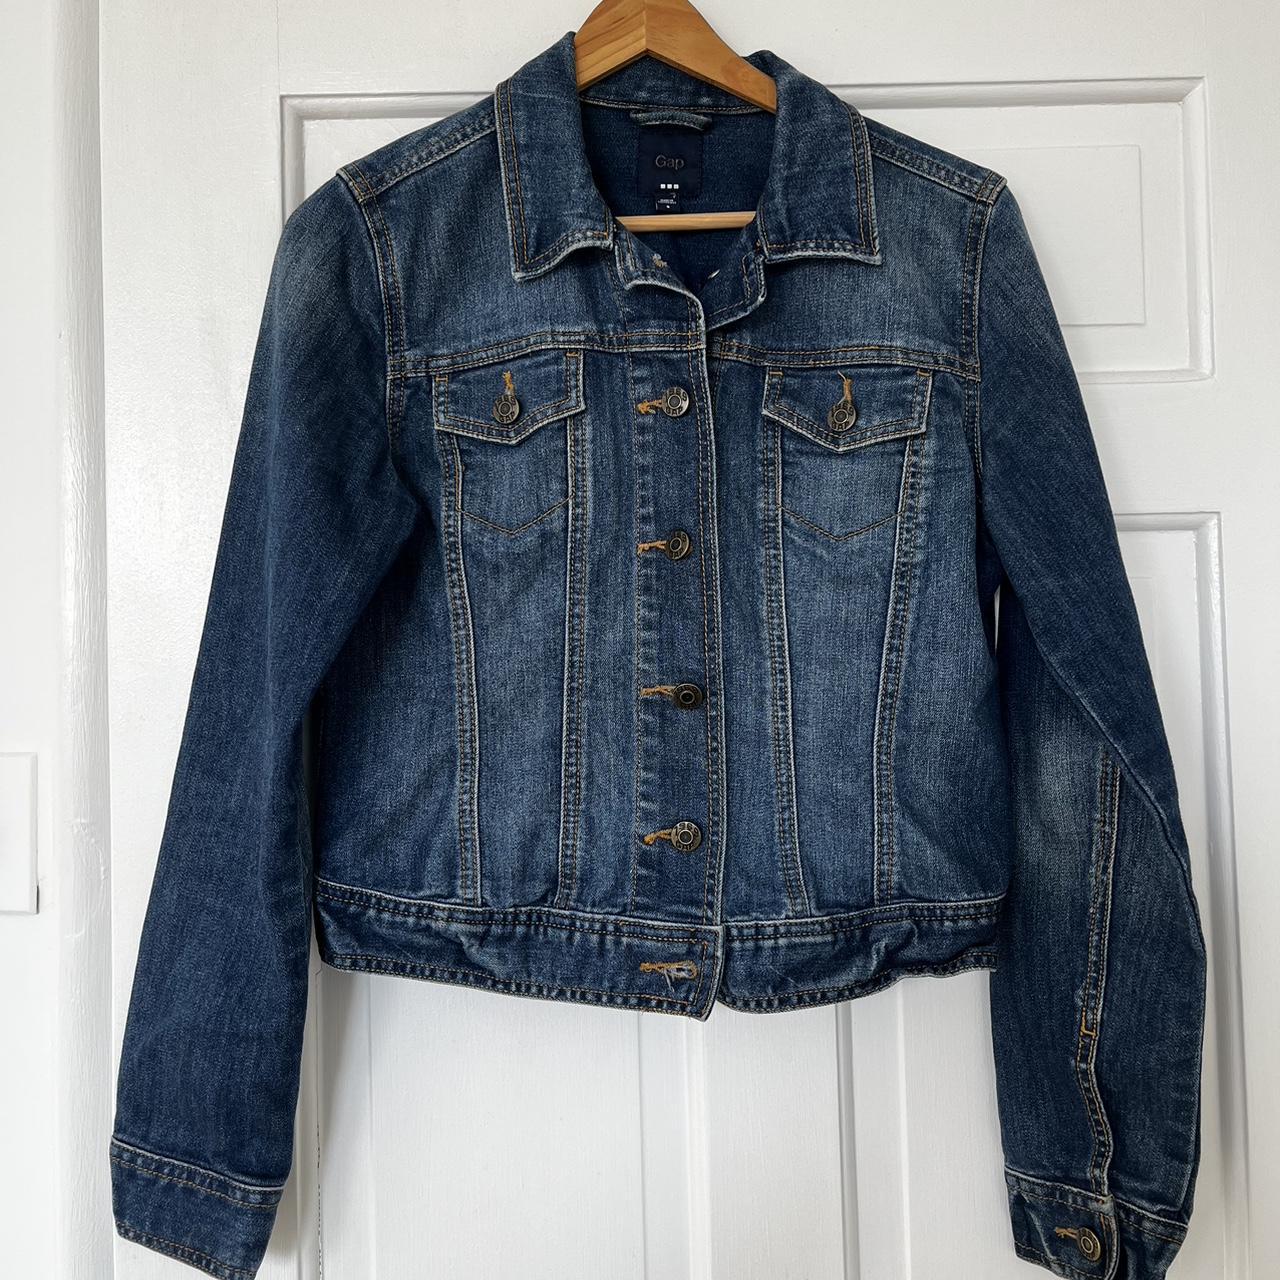 vintage gap cropped jean jacket perfect denim, not... - Depop